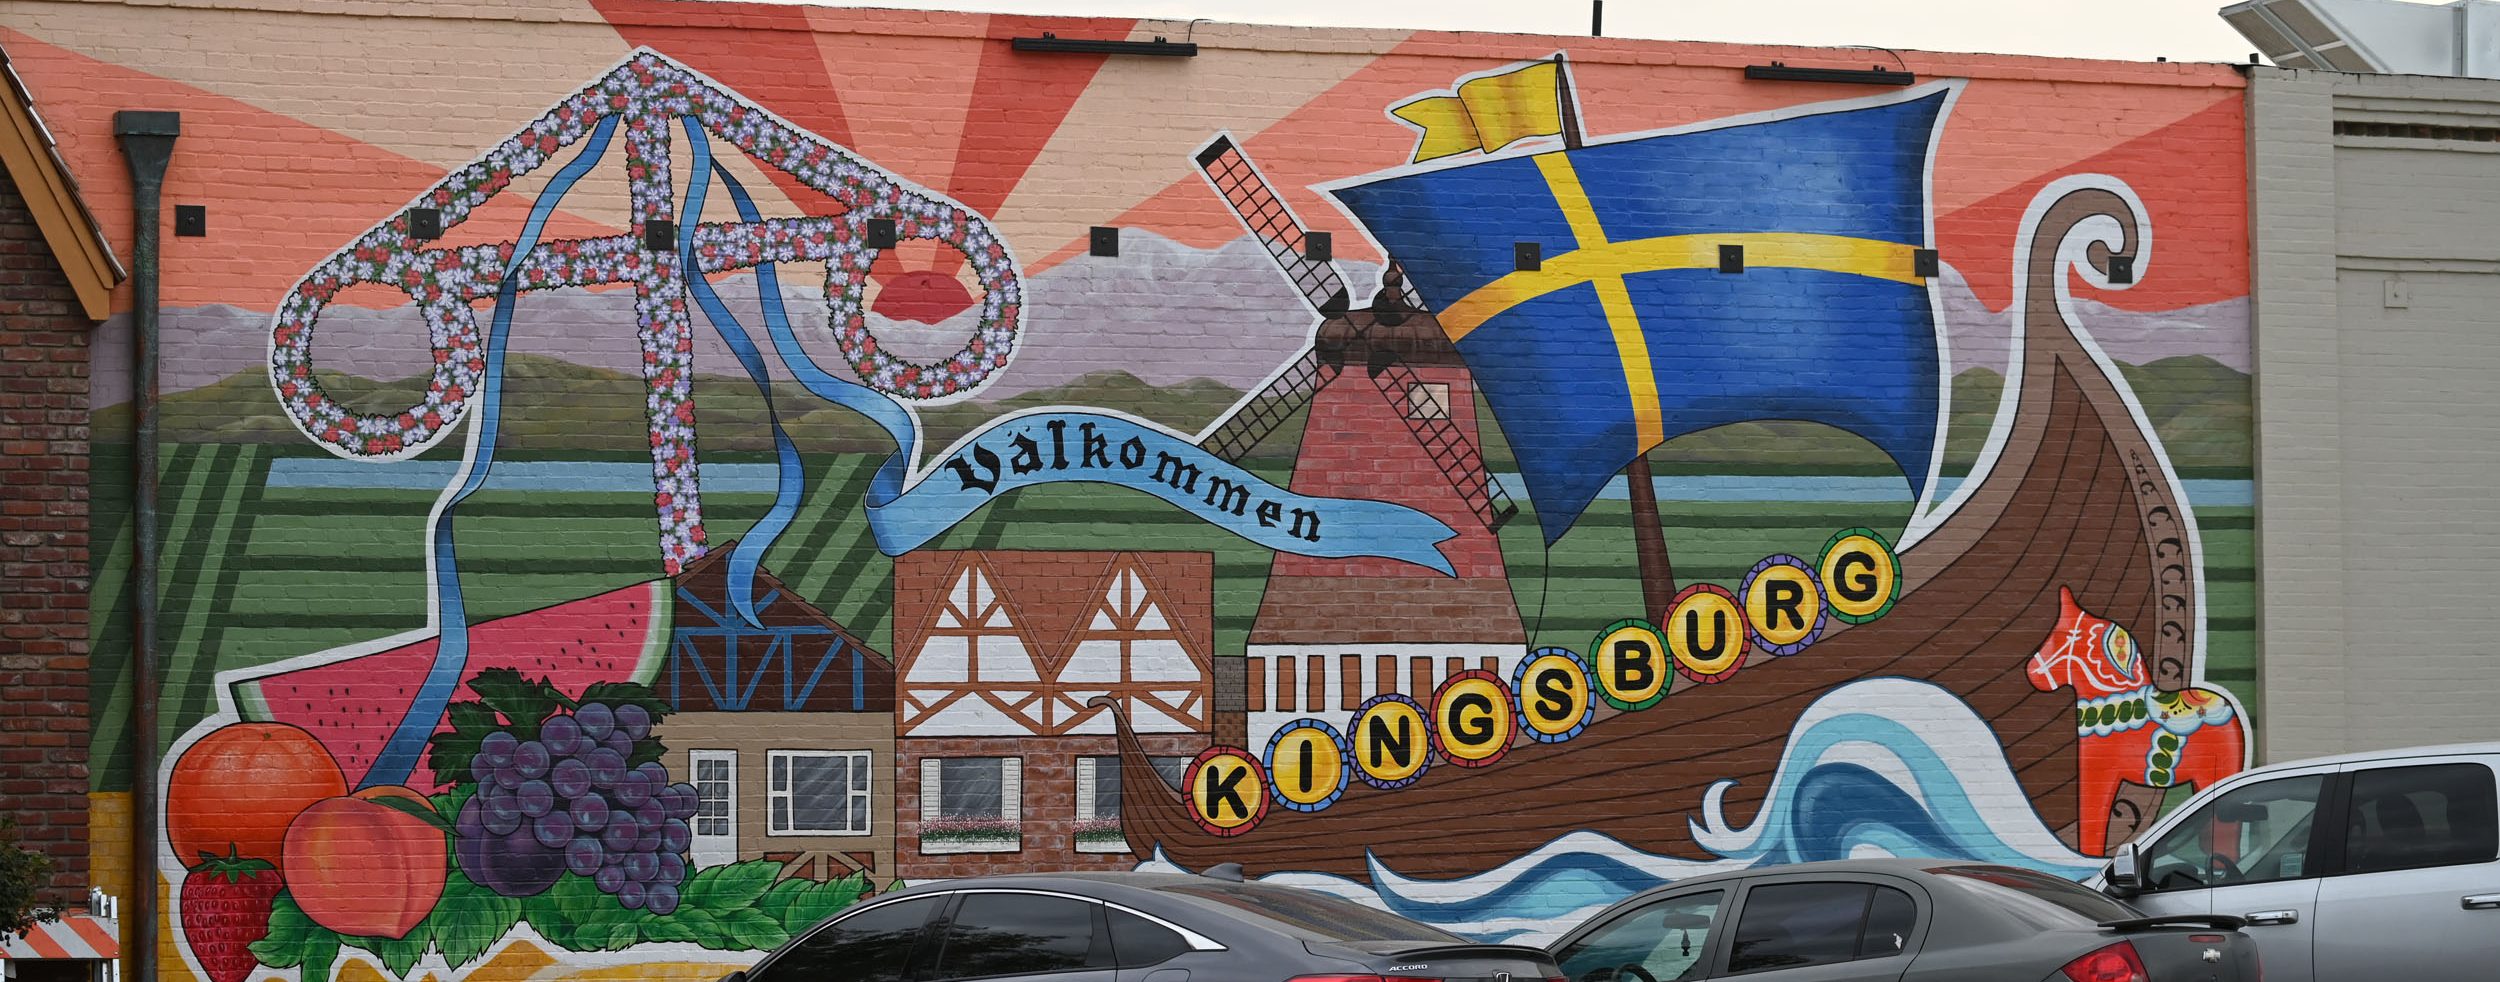 Wandgemälde in Kingsburg